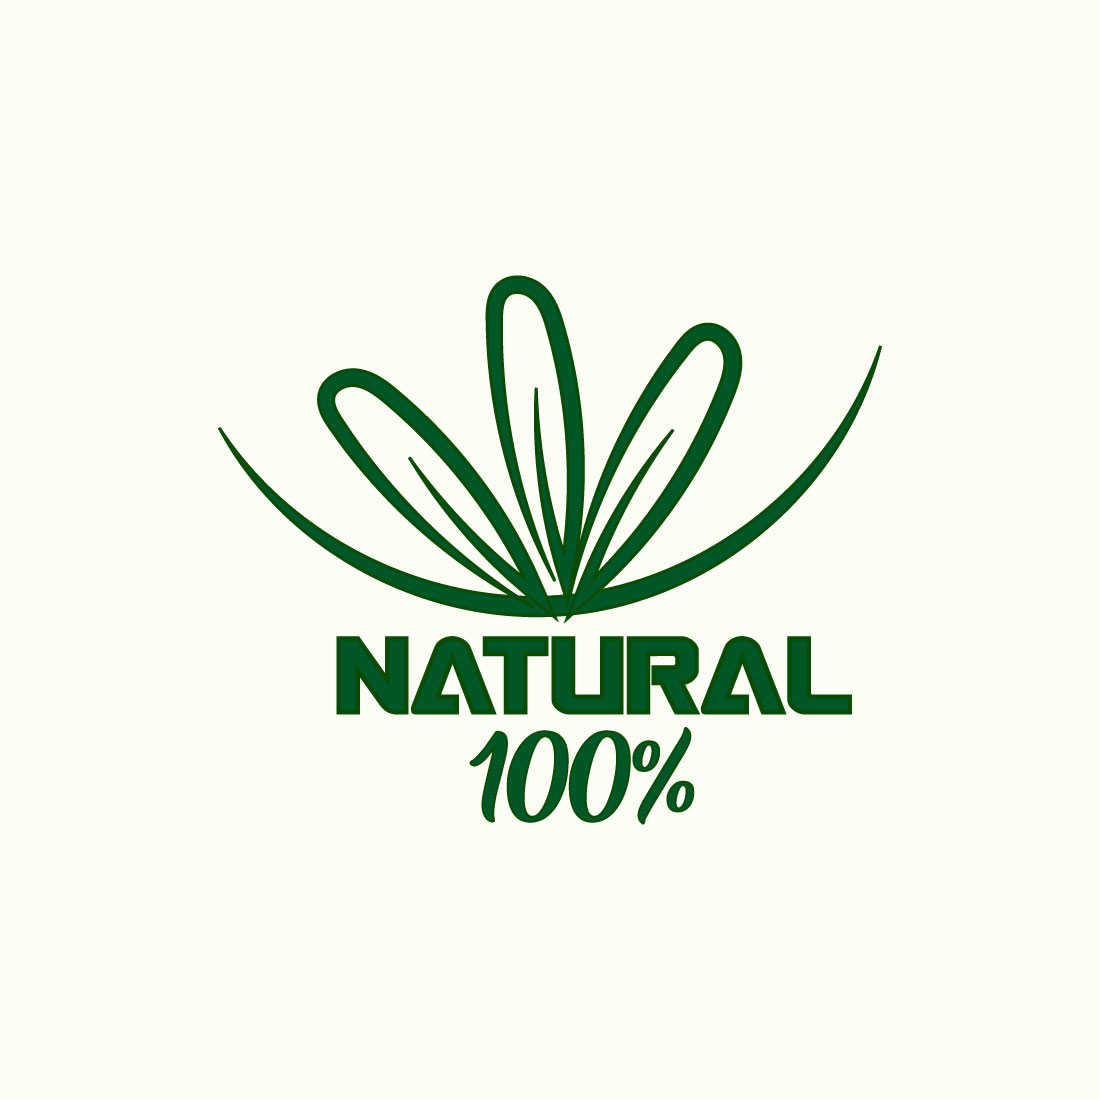 Free food leaf logo cover image.